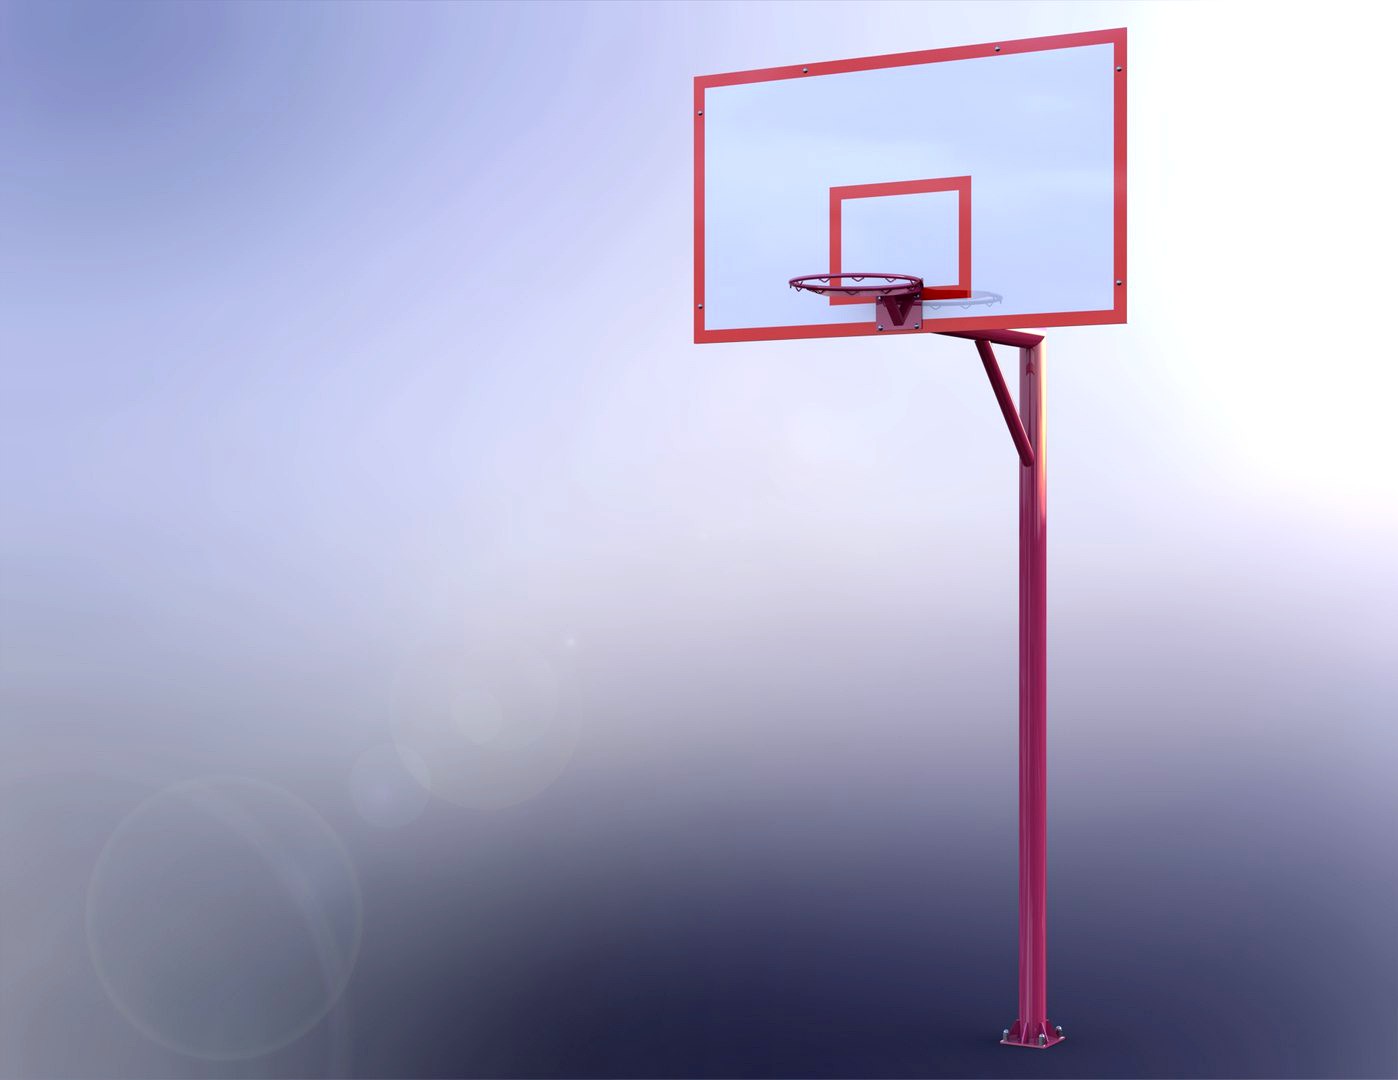 Basketball unit